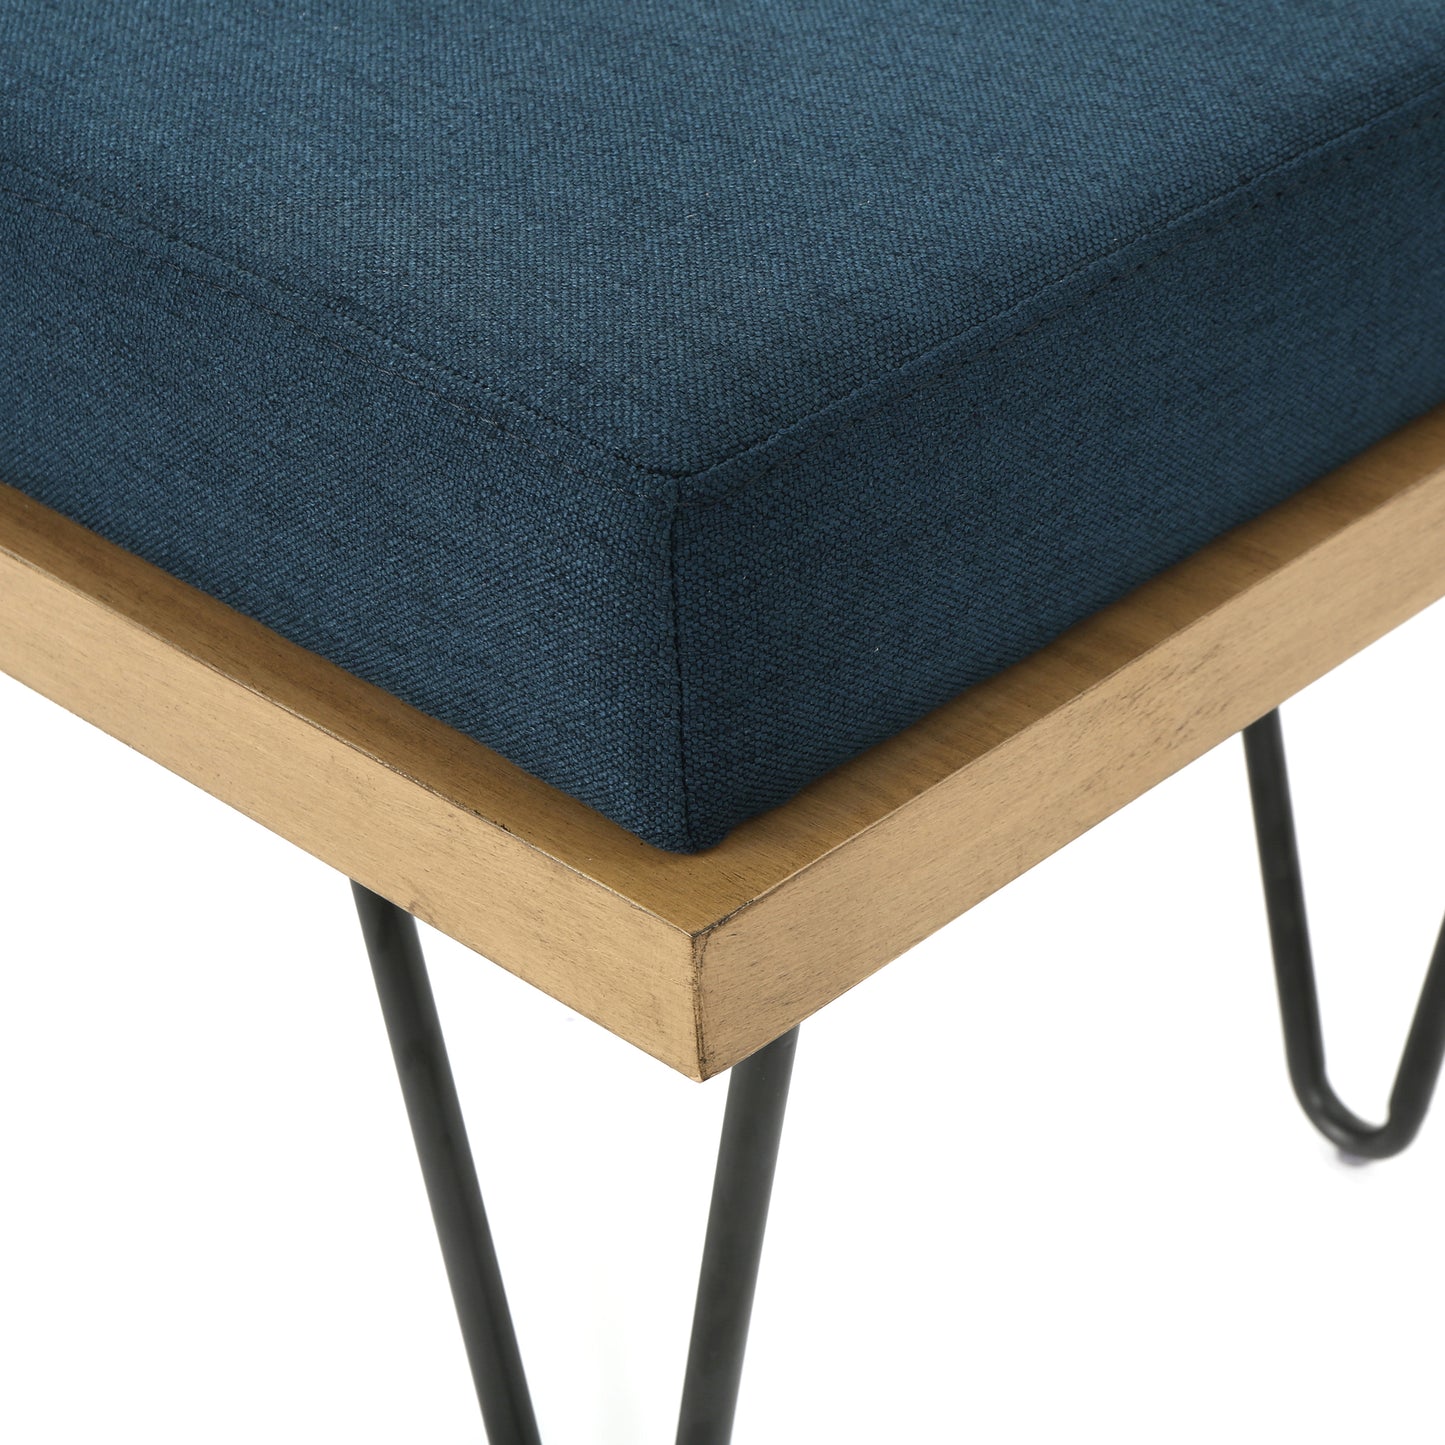 Elaina Industrial Modern Fabric Bench